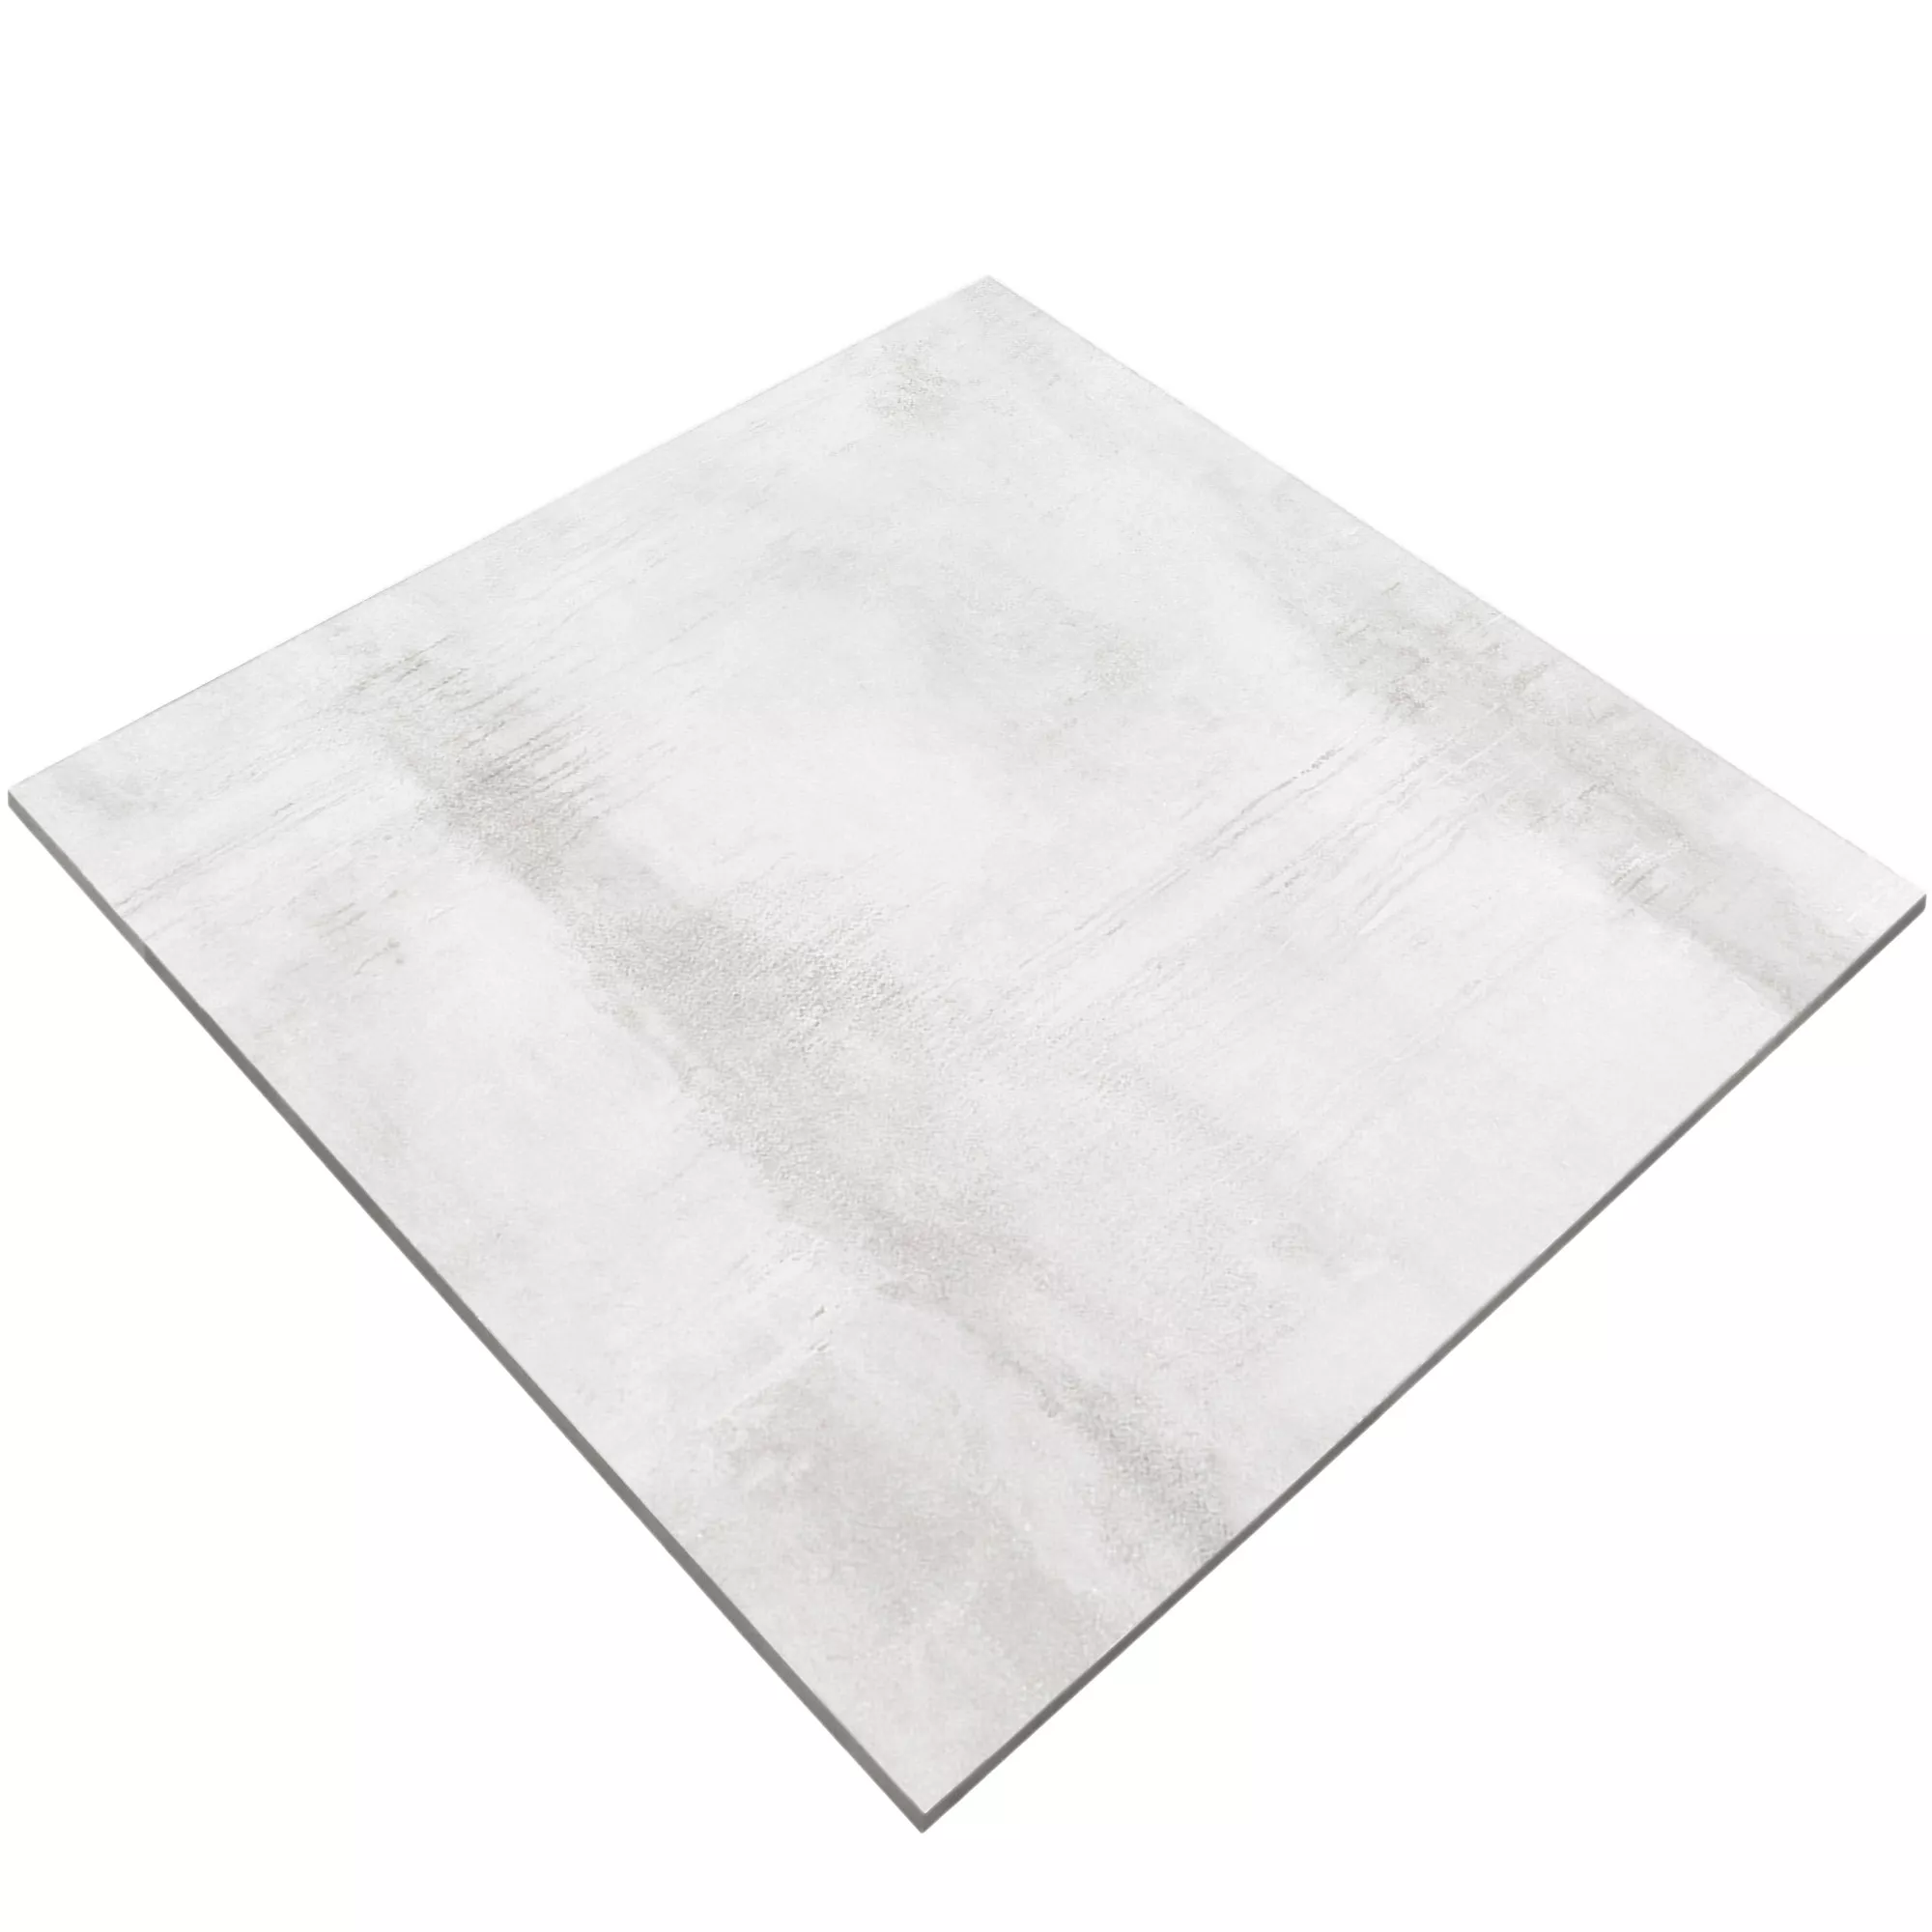 Vzorek Podlahové Dlaždice Tycoon Betonový Vzhled R10 Stříbrná 120x120cm